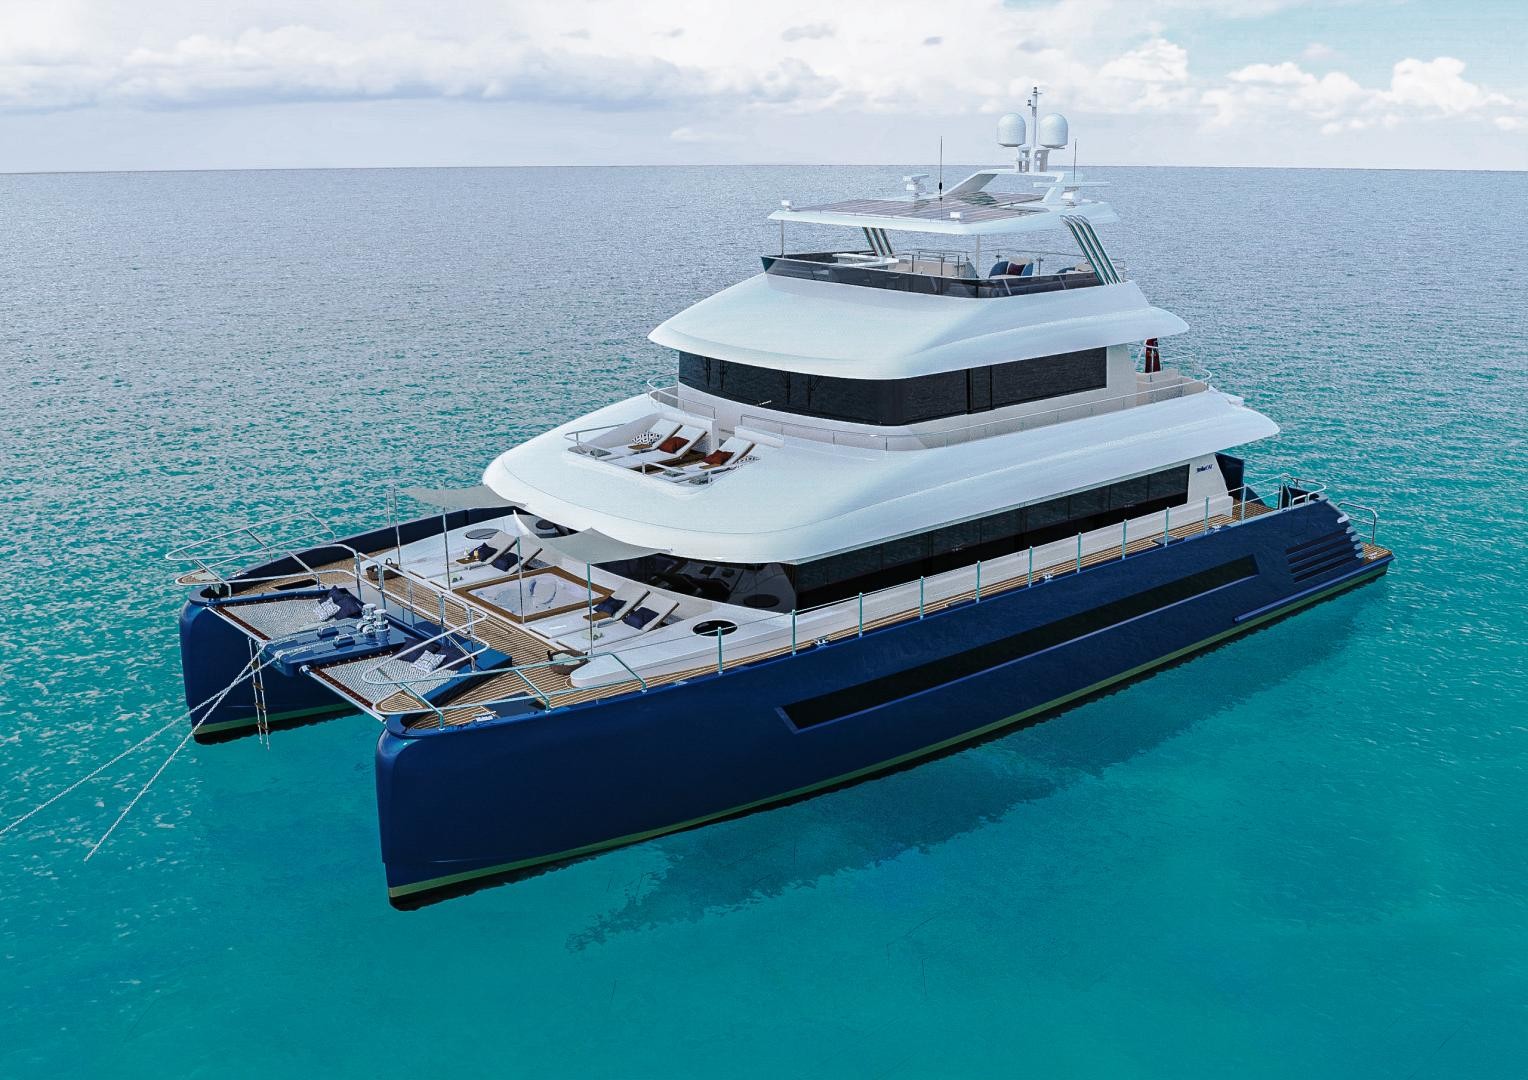 Stellarcat introduces 25m tri-deck powercat model